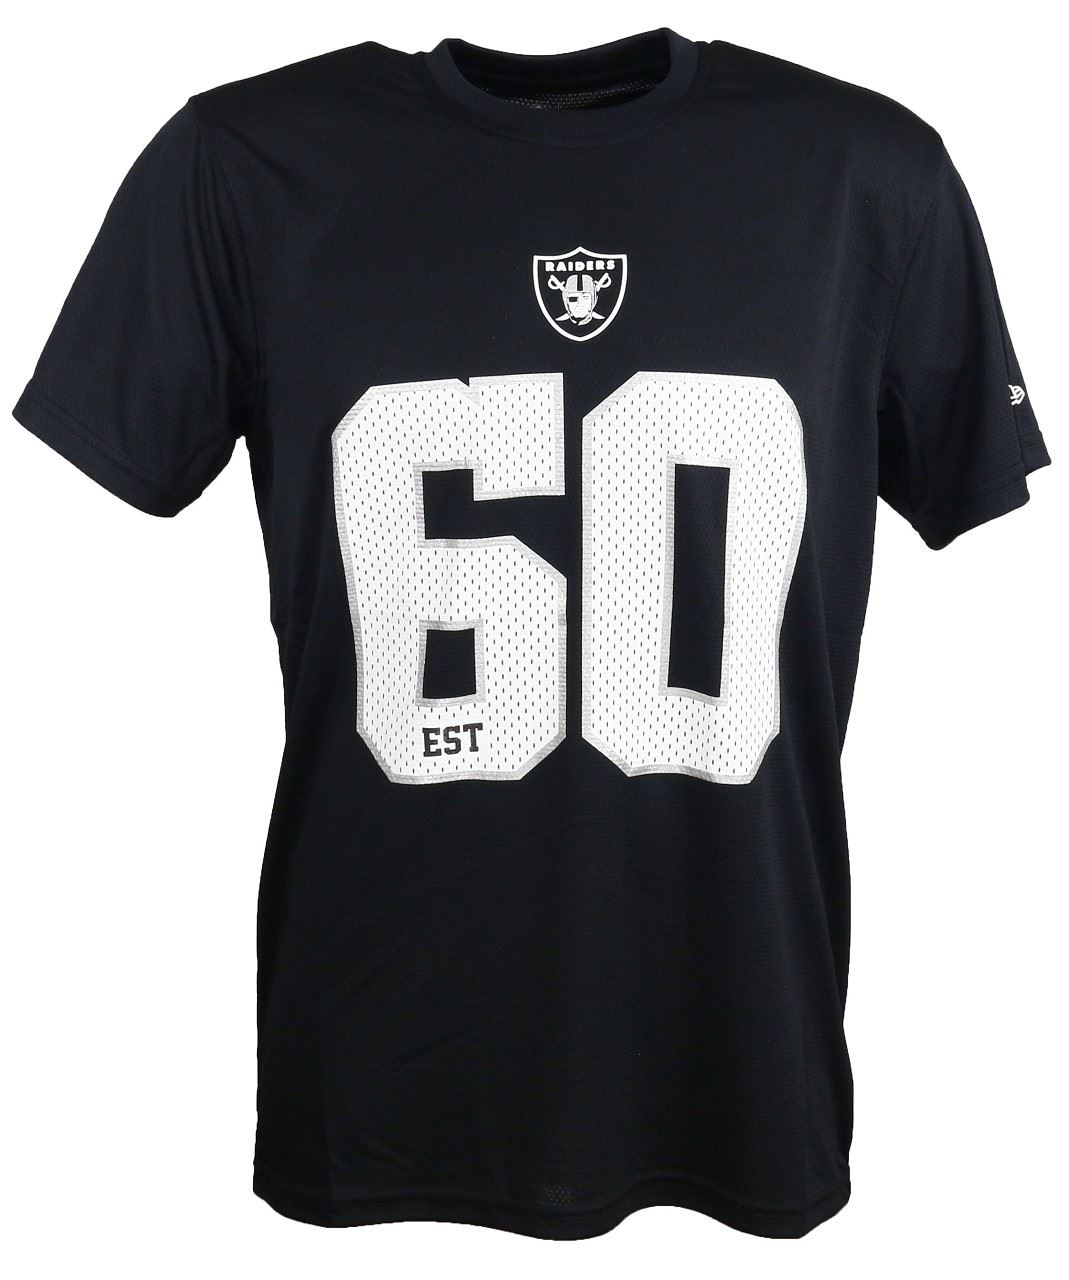 Las Vegas Raiders NFL Team Supporters T-Shirt New Era